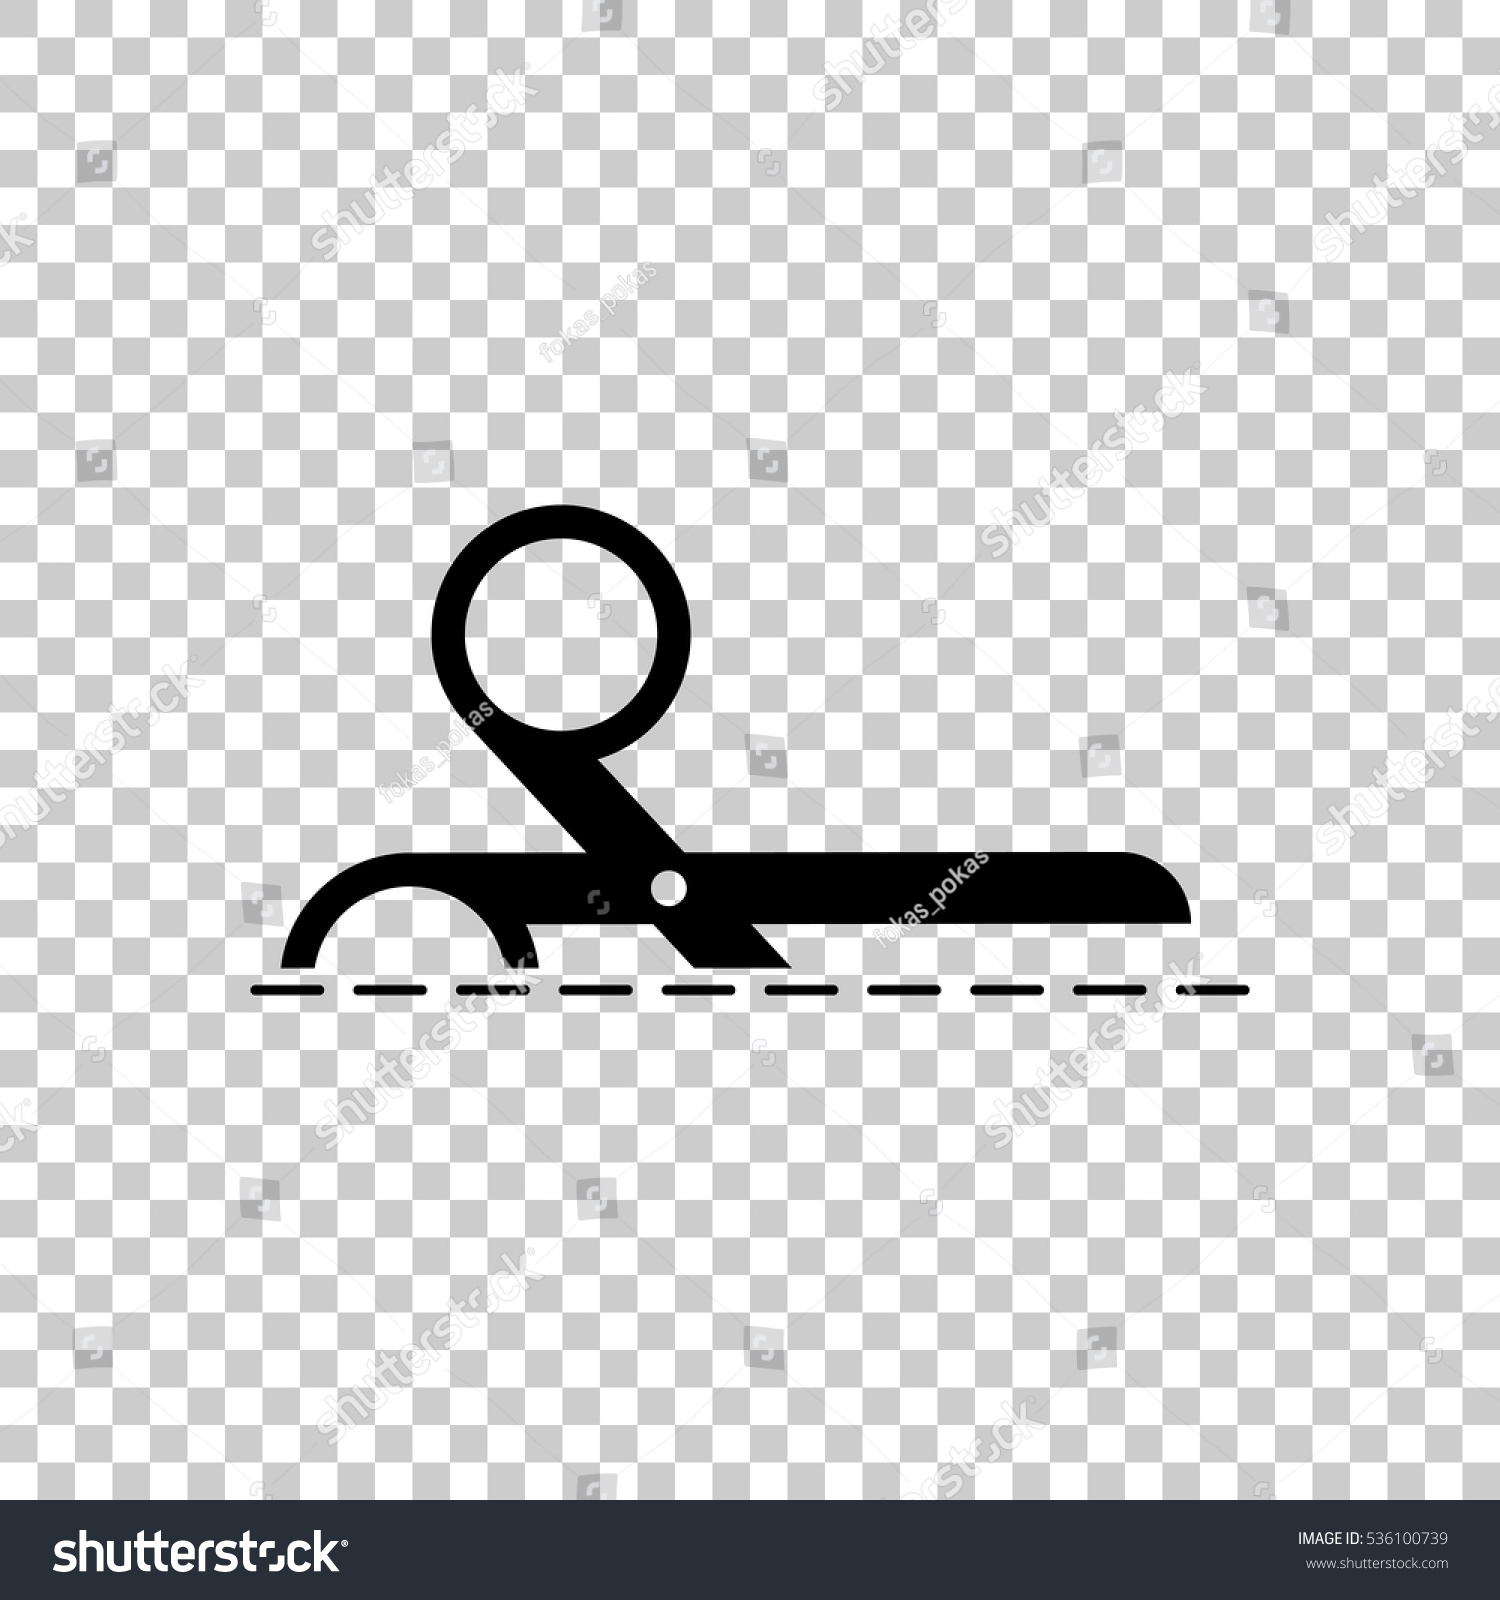 scissors icon. Black icon on transparent background. #536100739